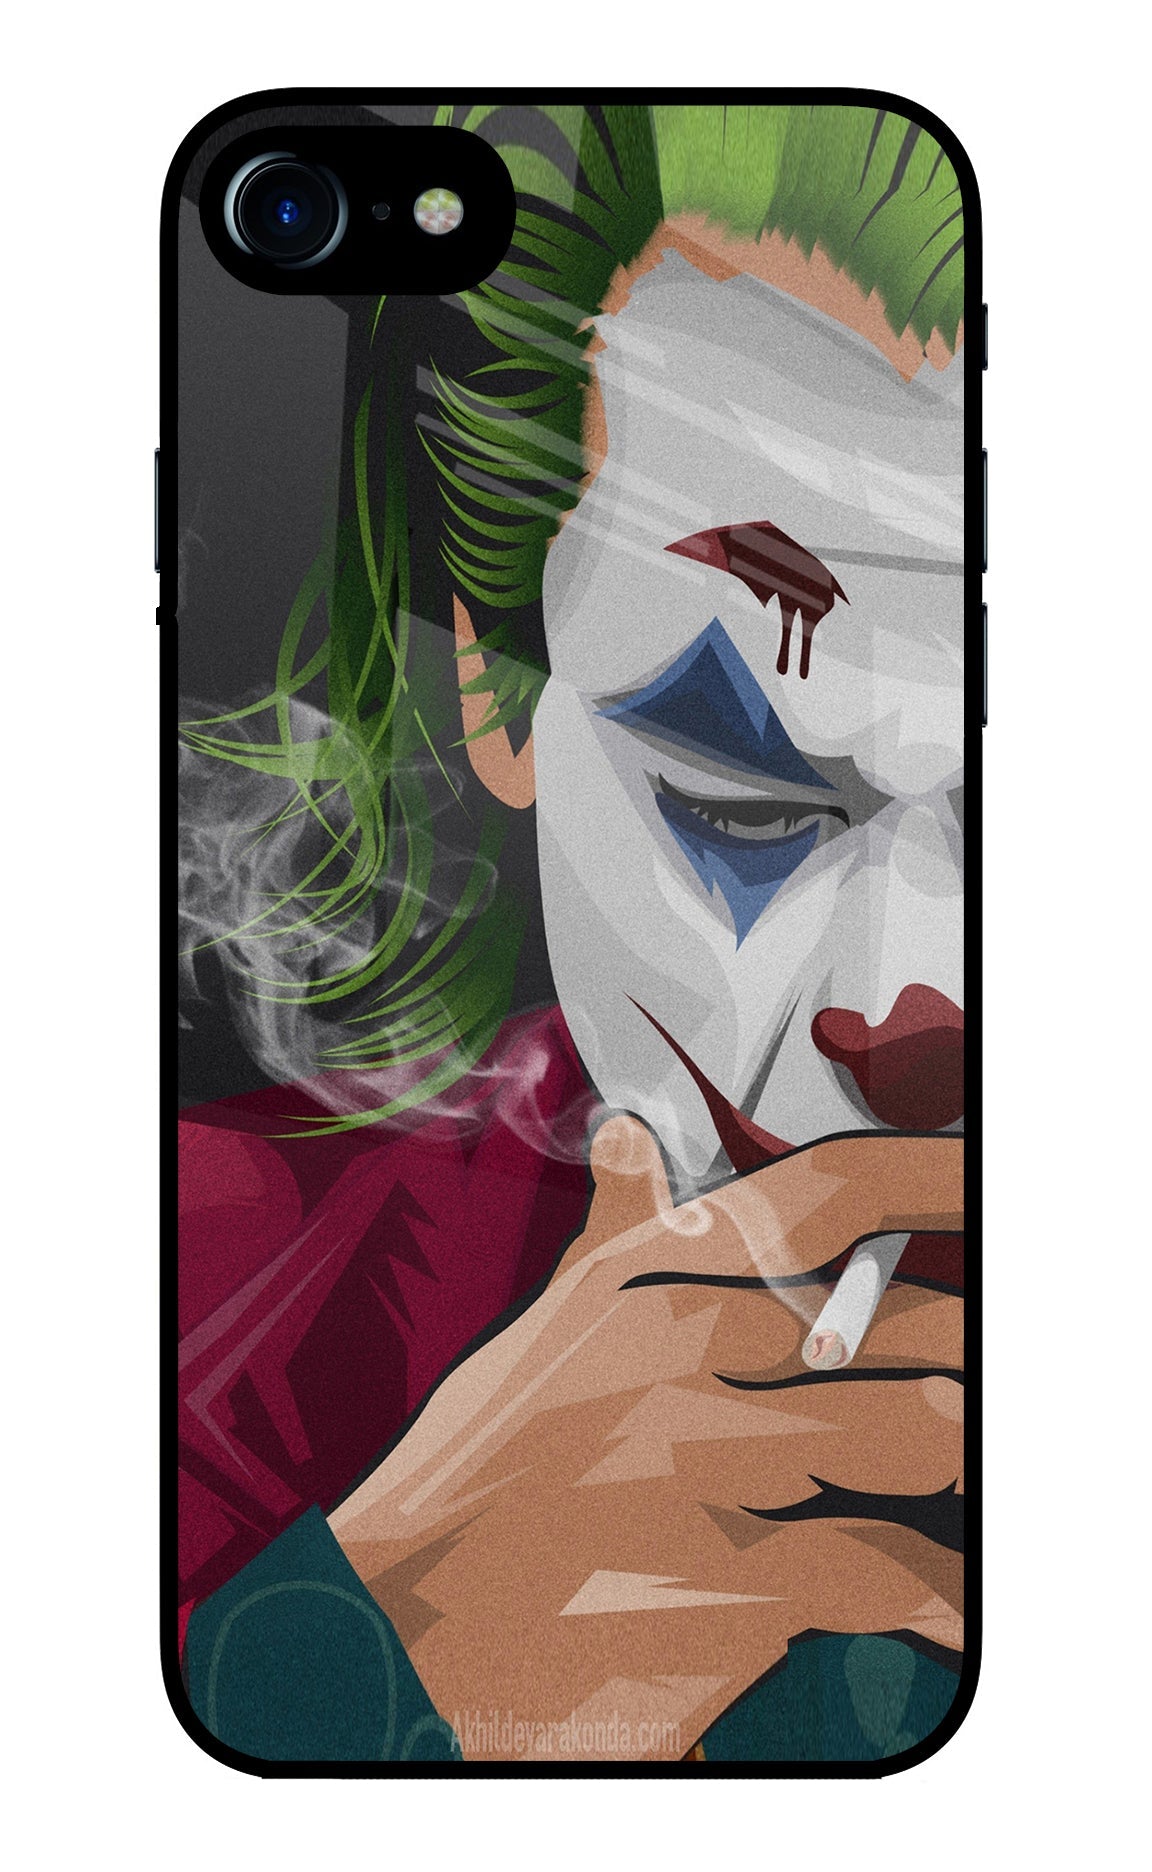 Joker Smoking iPhone 7/7s Glass Case